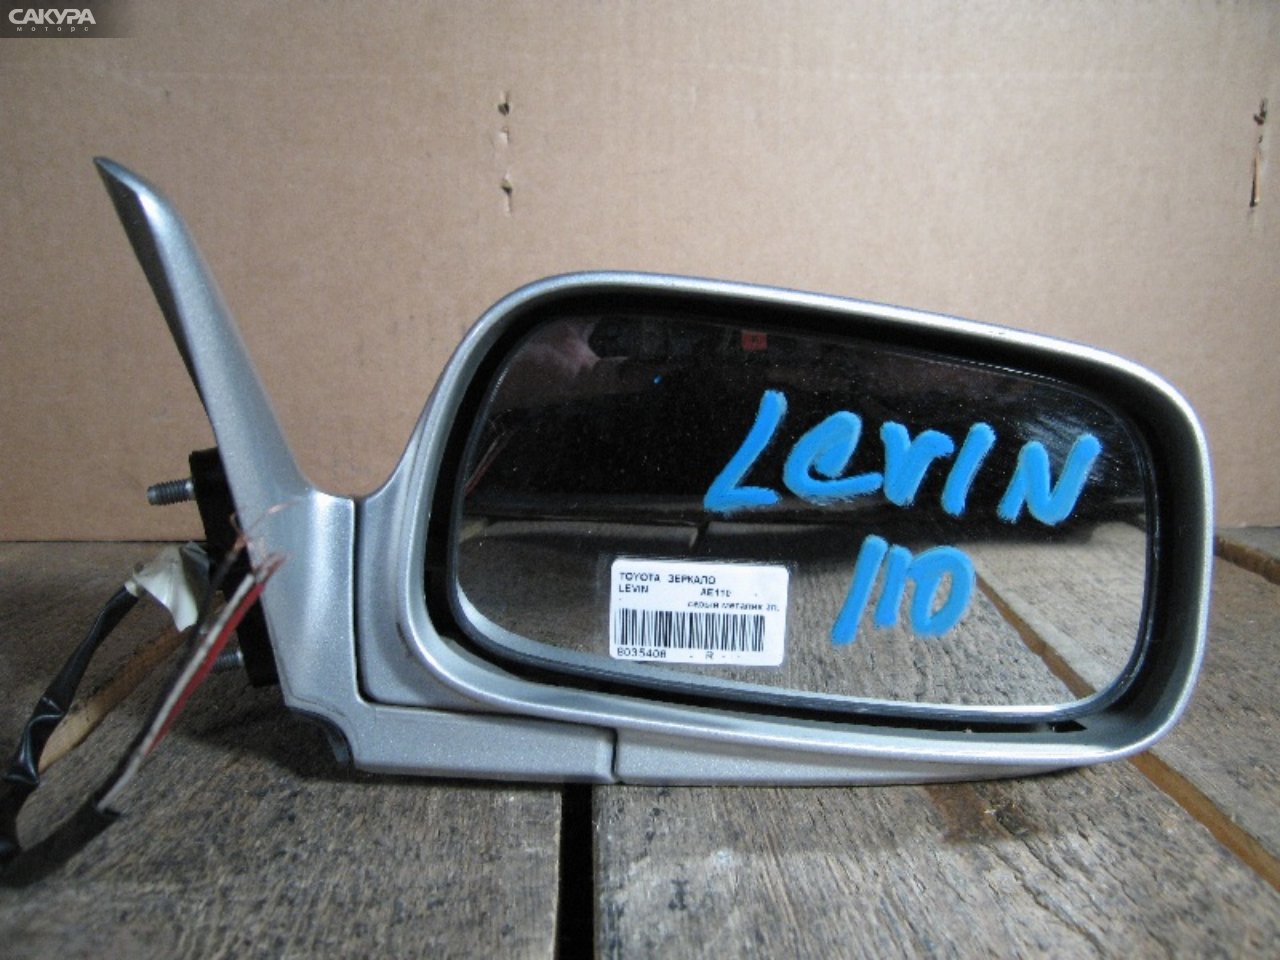 Зеркало боковое правое Toyota Corolla Levin AE110: купить в Сакура Абакан.